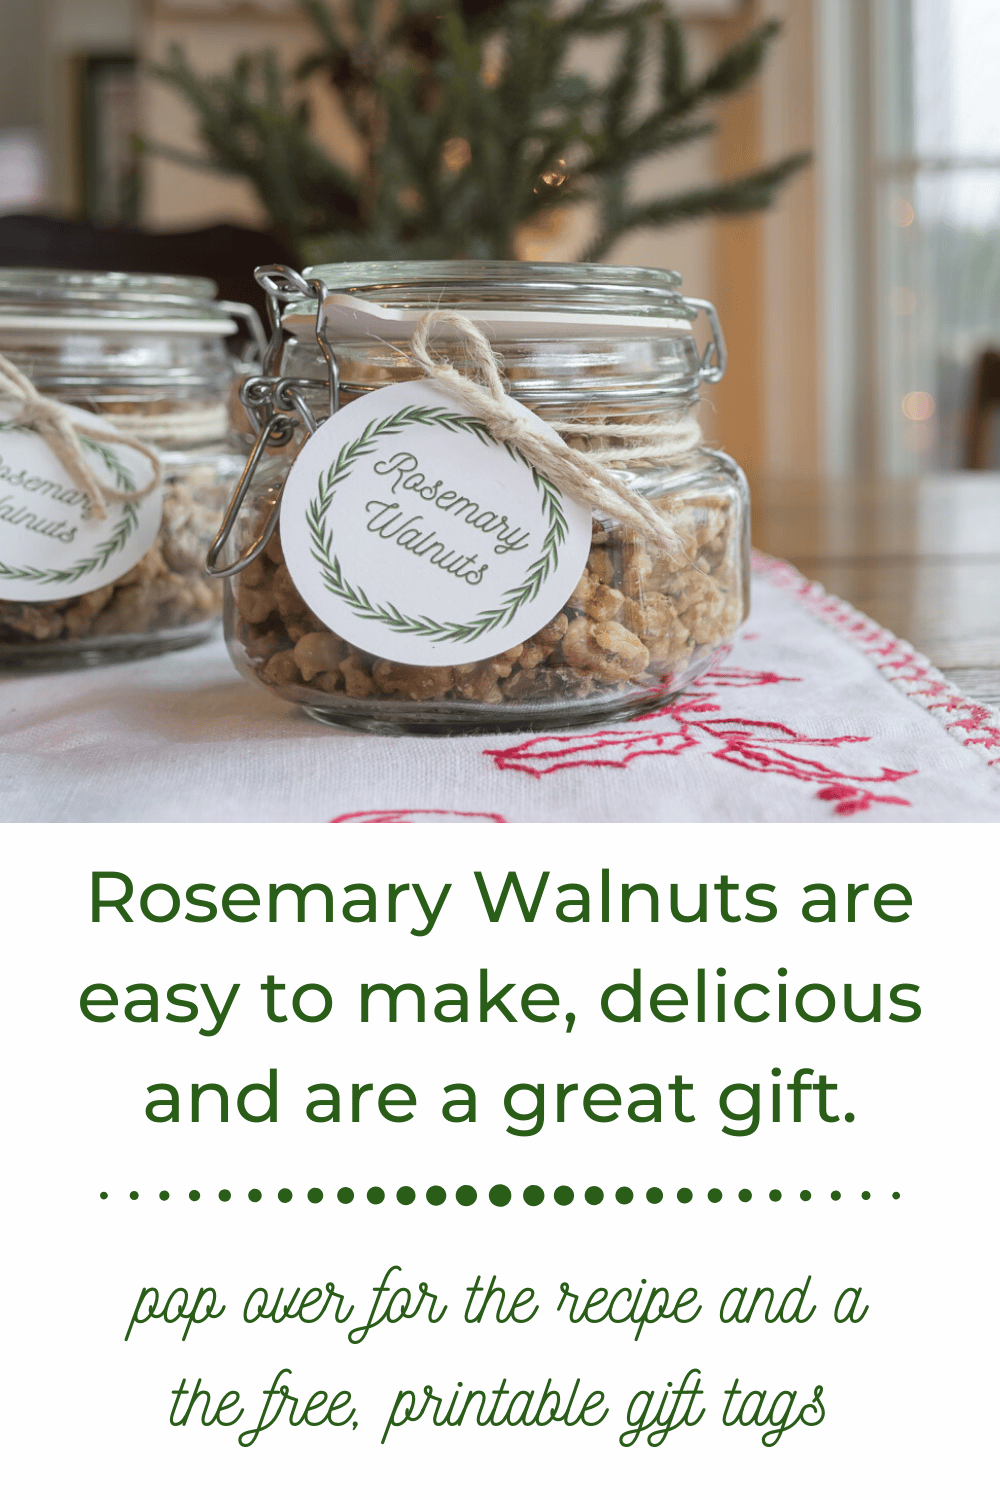 Rosemary Walnuts in a jar